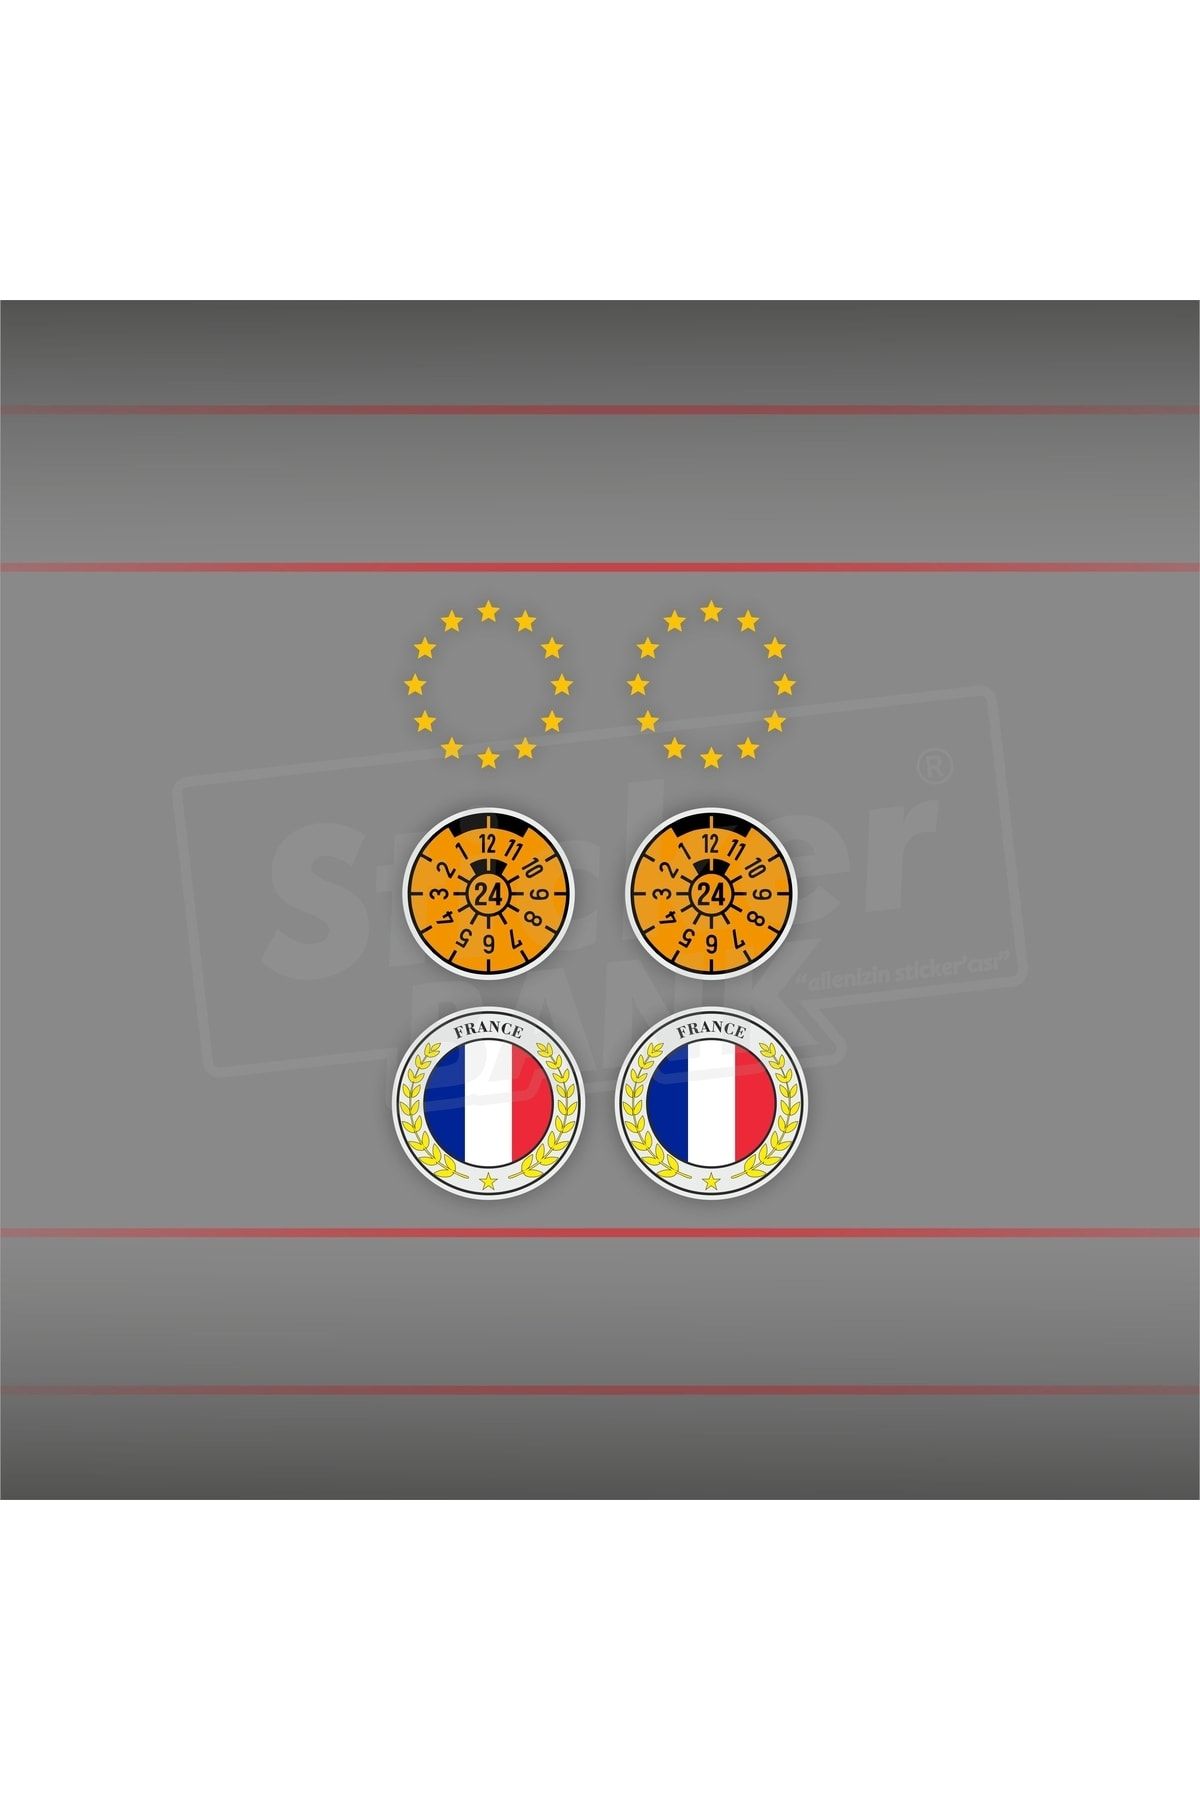 Sticker Bank Araba Sticker Fransa Plaka Pul Takımı Sticker